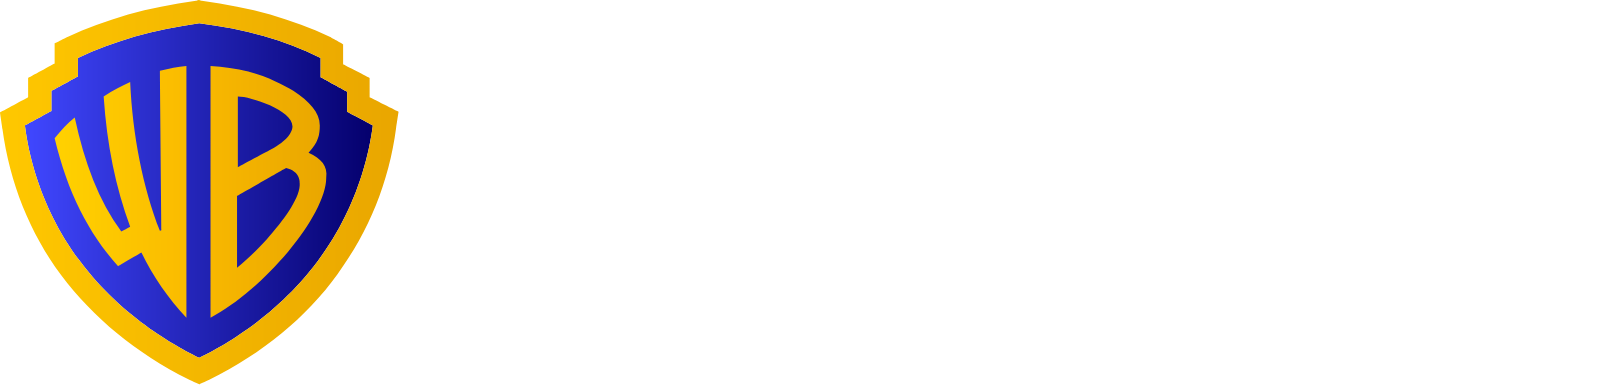 Warner Bros. Discovery logo grand pour les fonds sombres (PNG transparent)